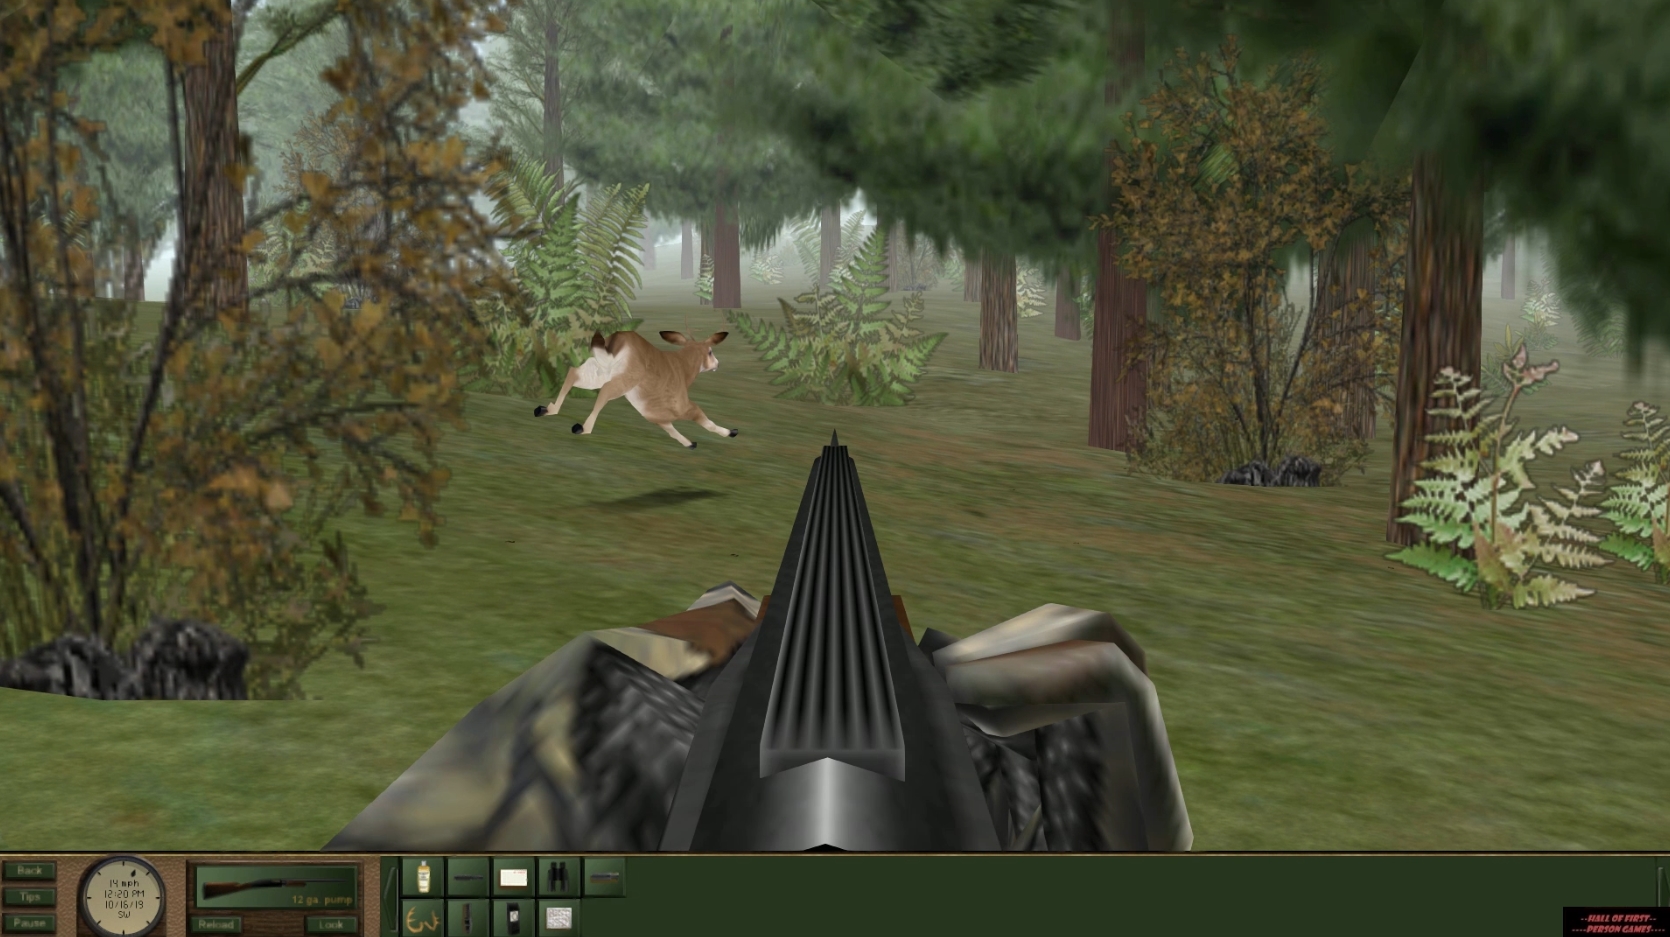 deer hunter 4 full version